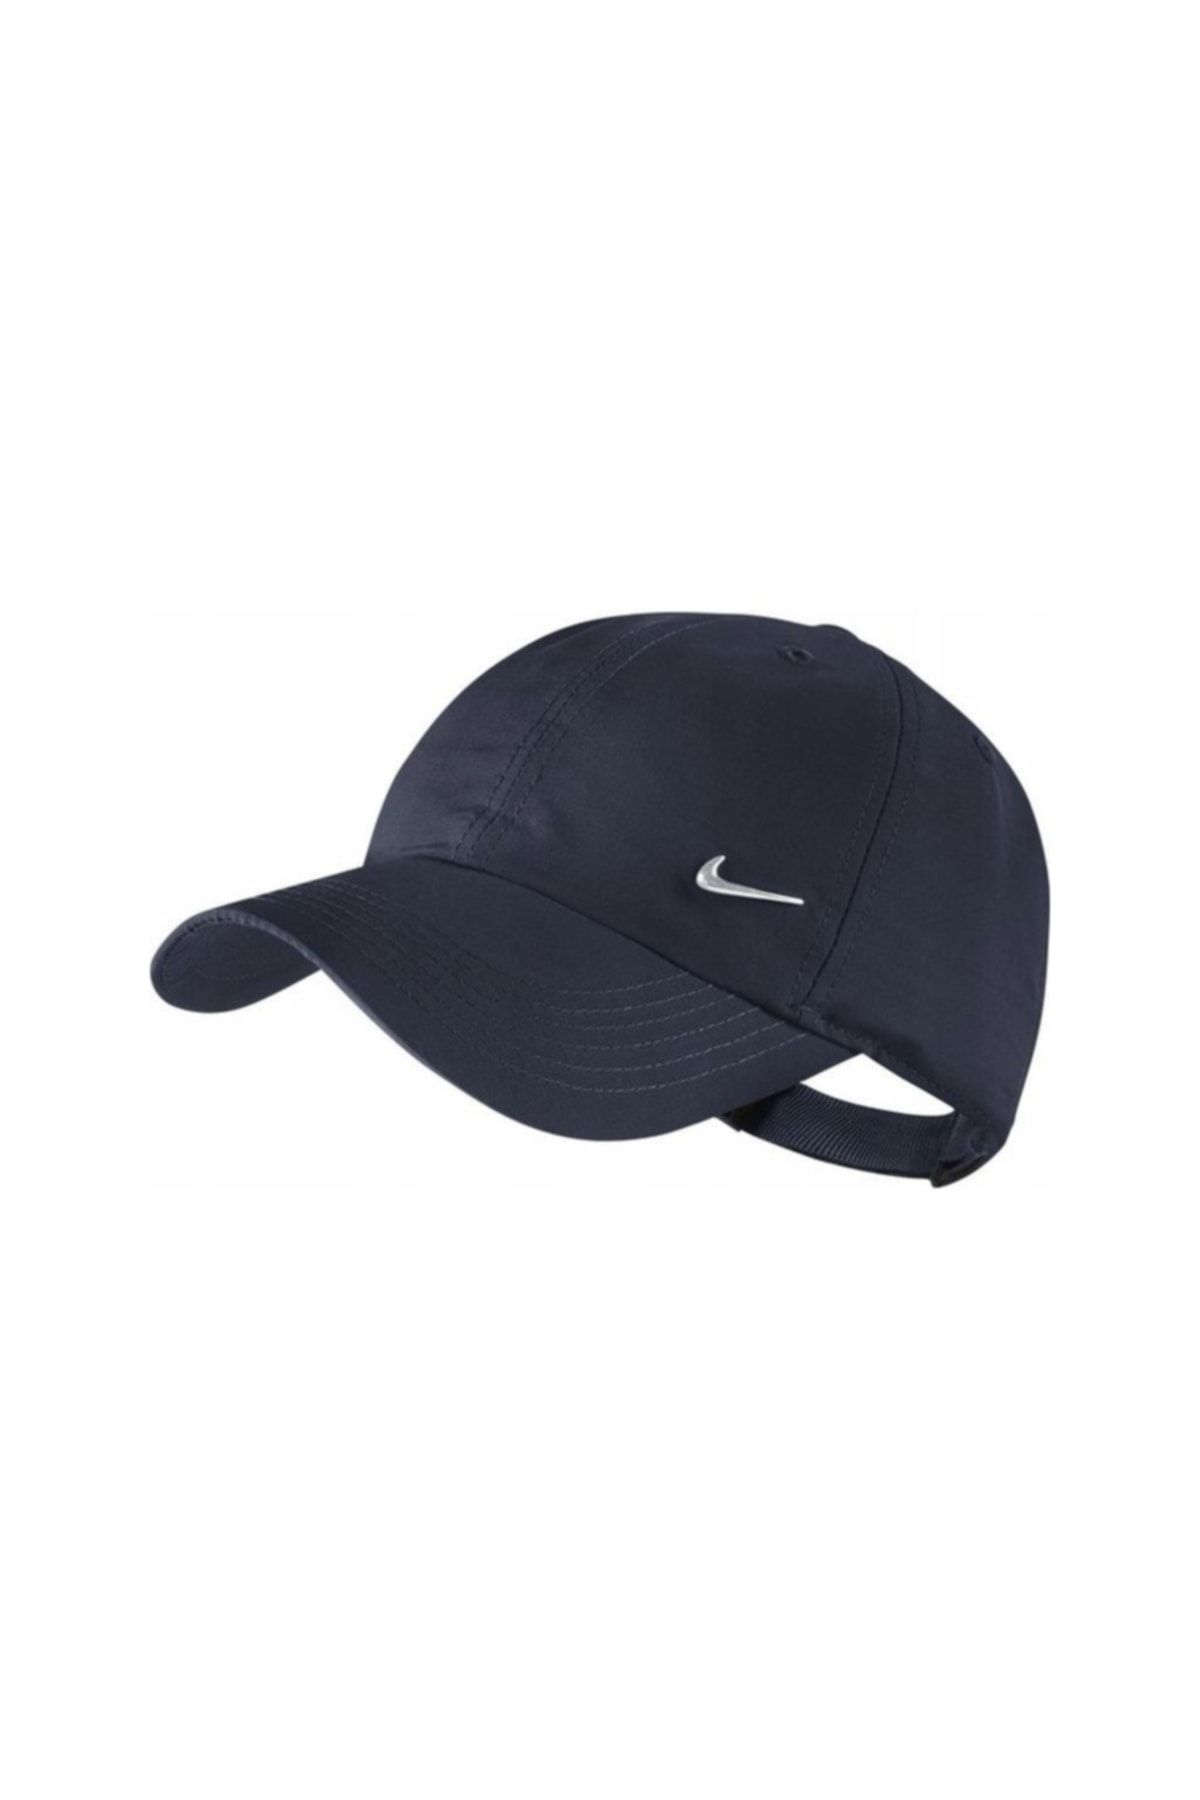 Nike Metal Swoosh Lacivert Şapka Cw4607-451